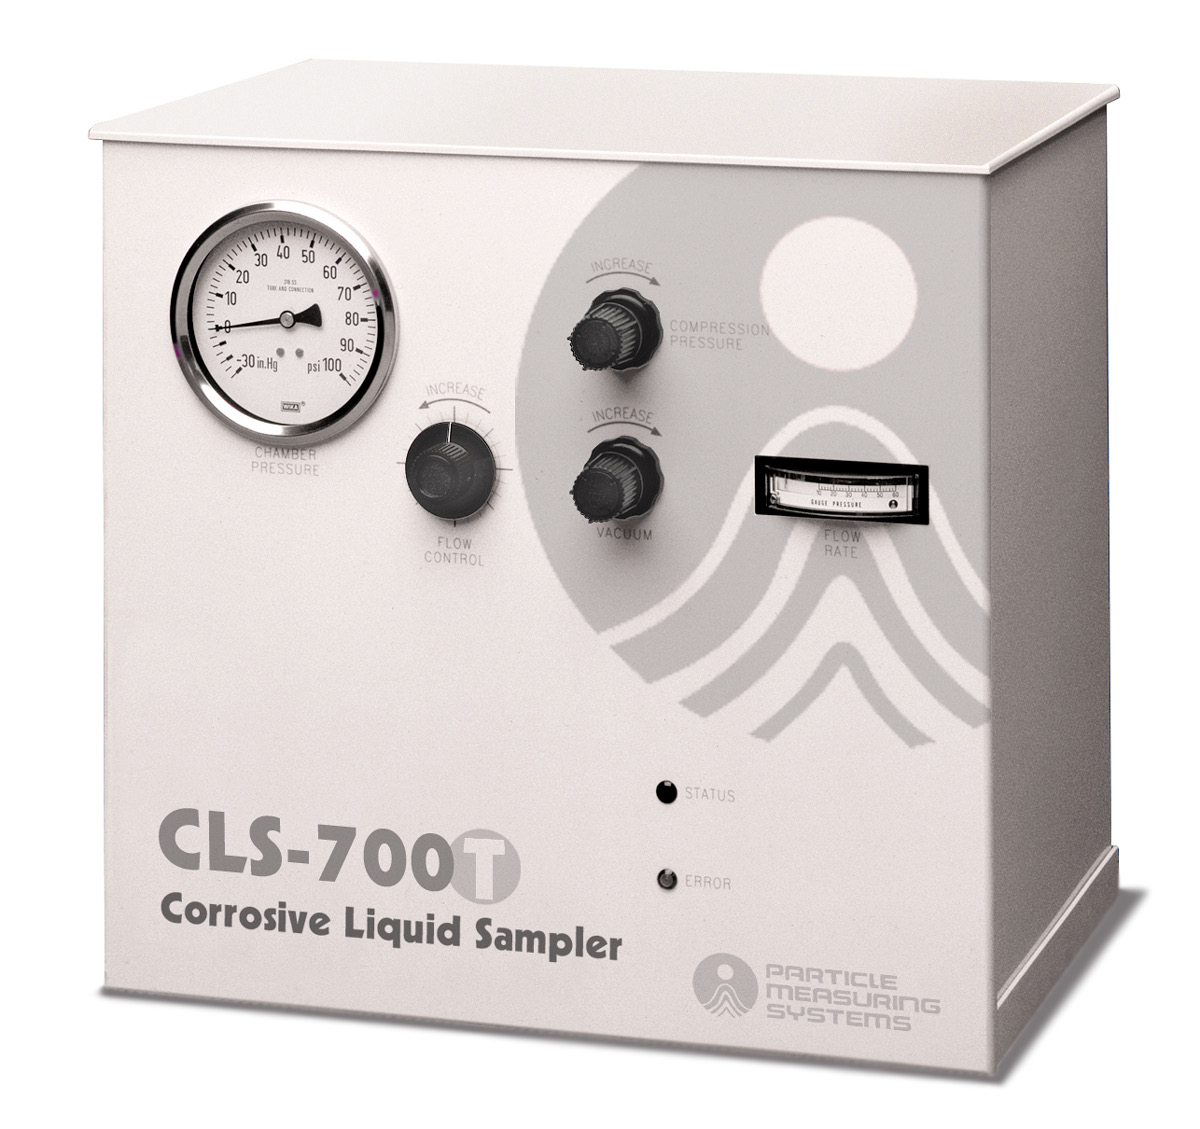 CLS-700 for Corrosive Liquid Particle Sampling